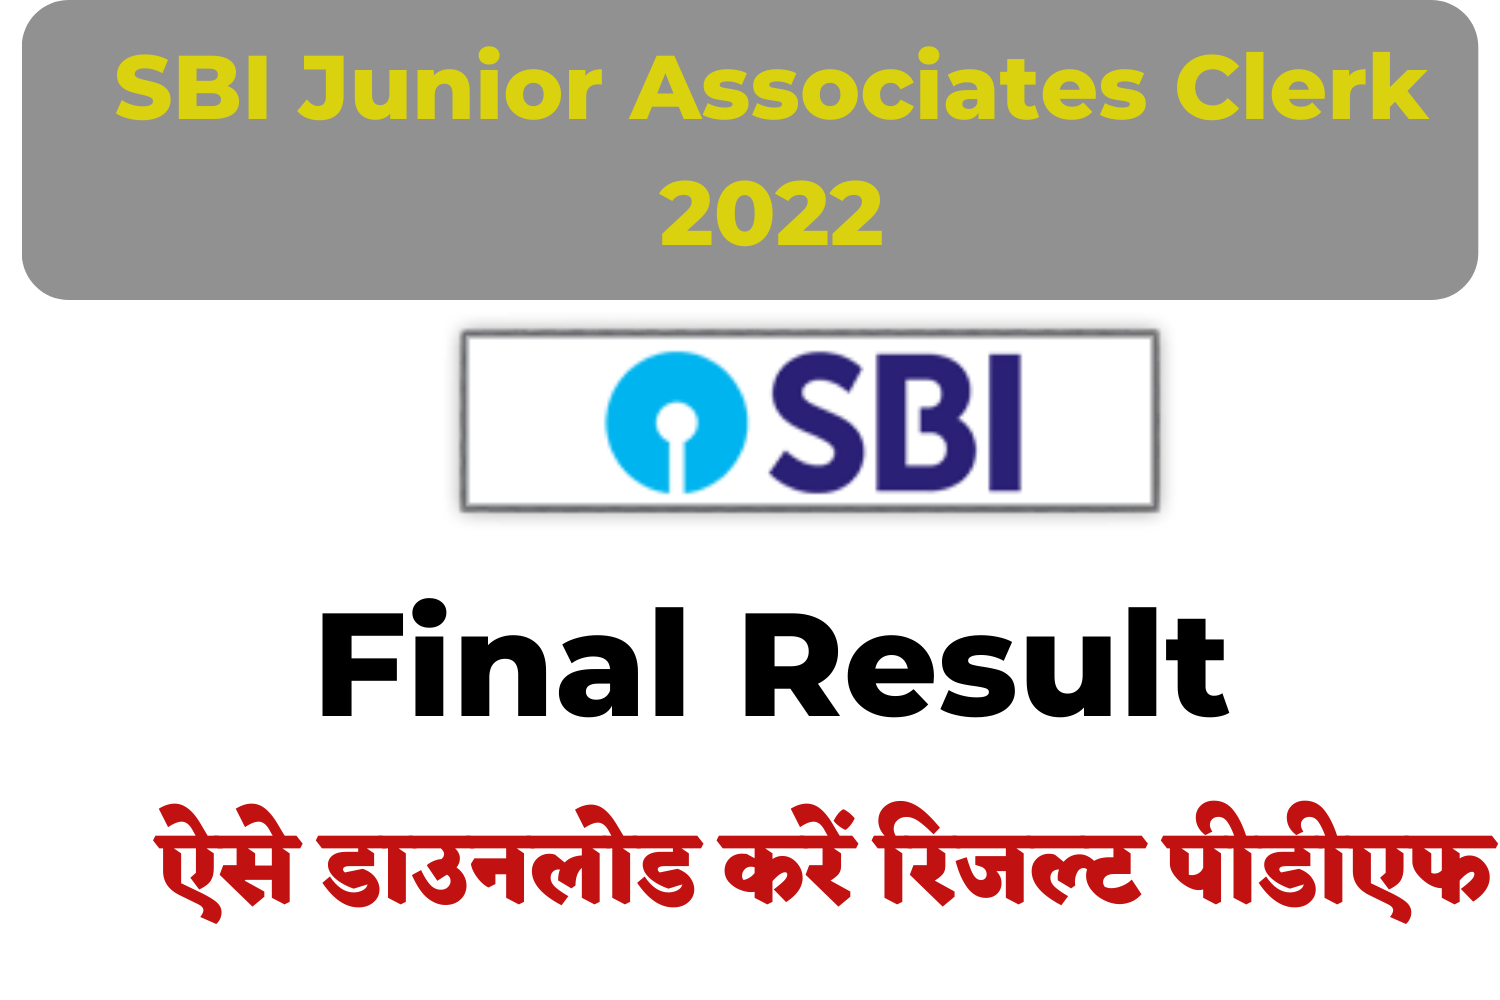 SBI Junior Associates Clerk 2022 Final Result | एसबीआई जूनियर एसोसिएट्स क्लर्क फाइनल रिजल्ट